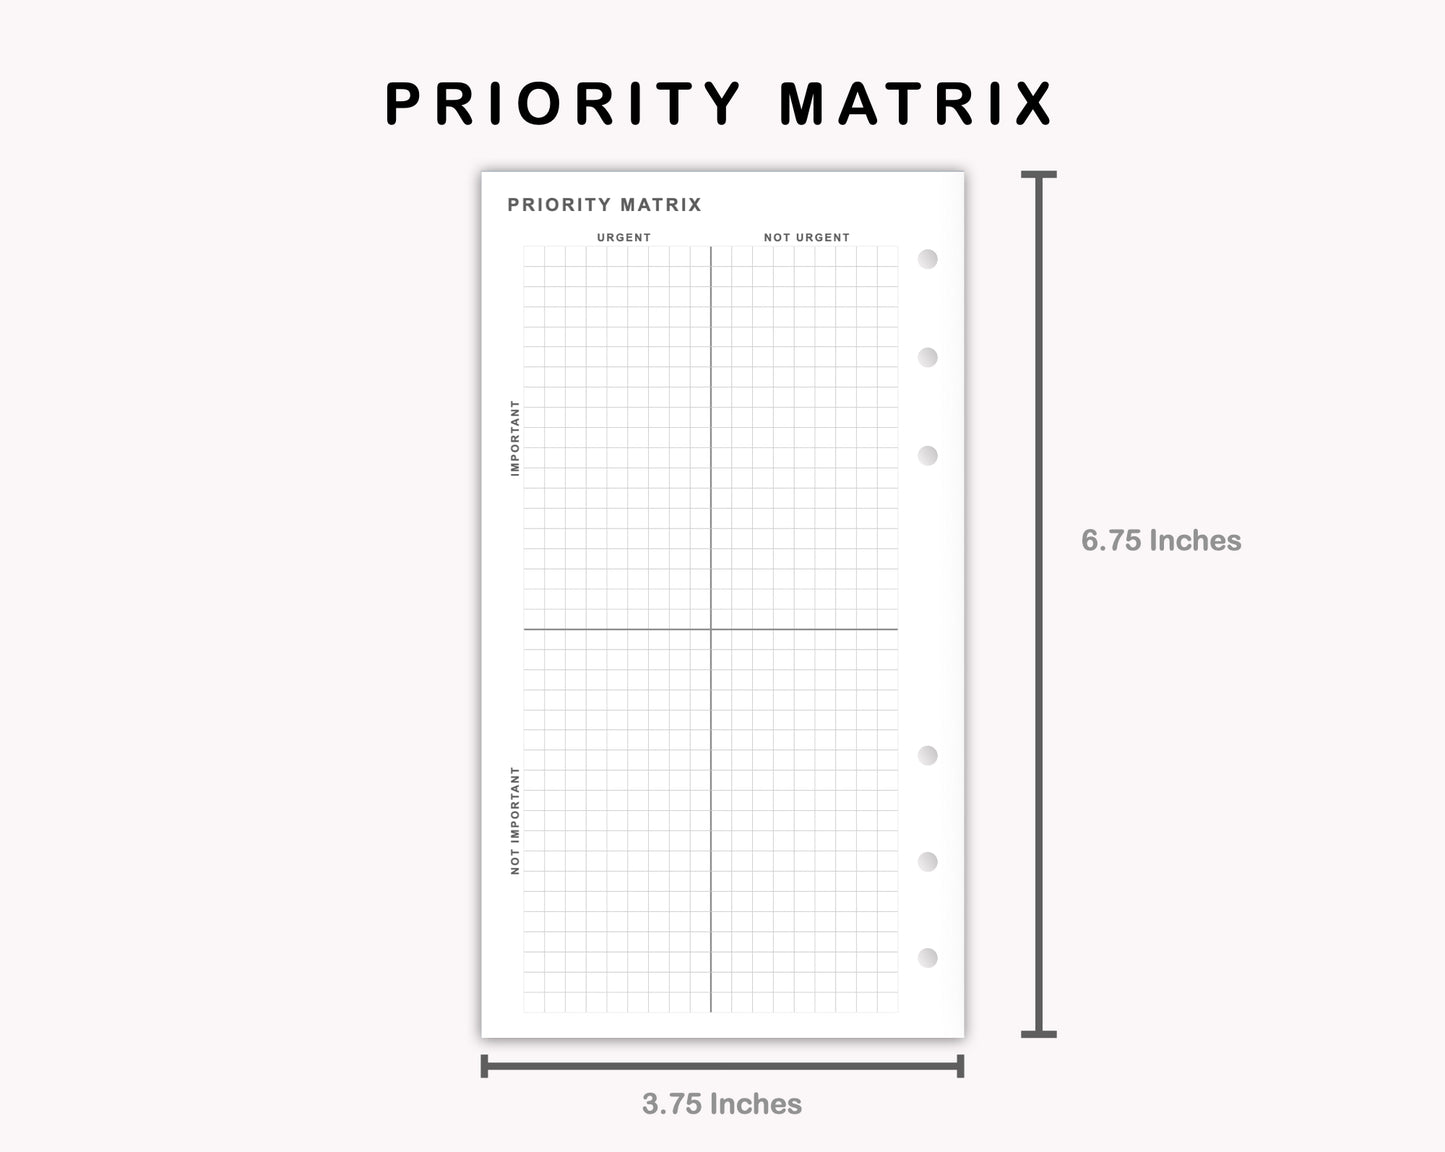 Personal Inserts - Priority Matrix